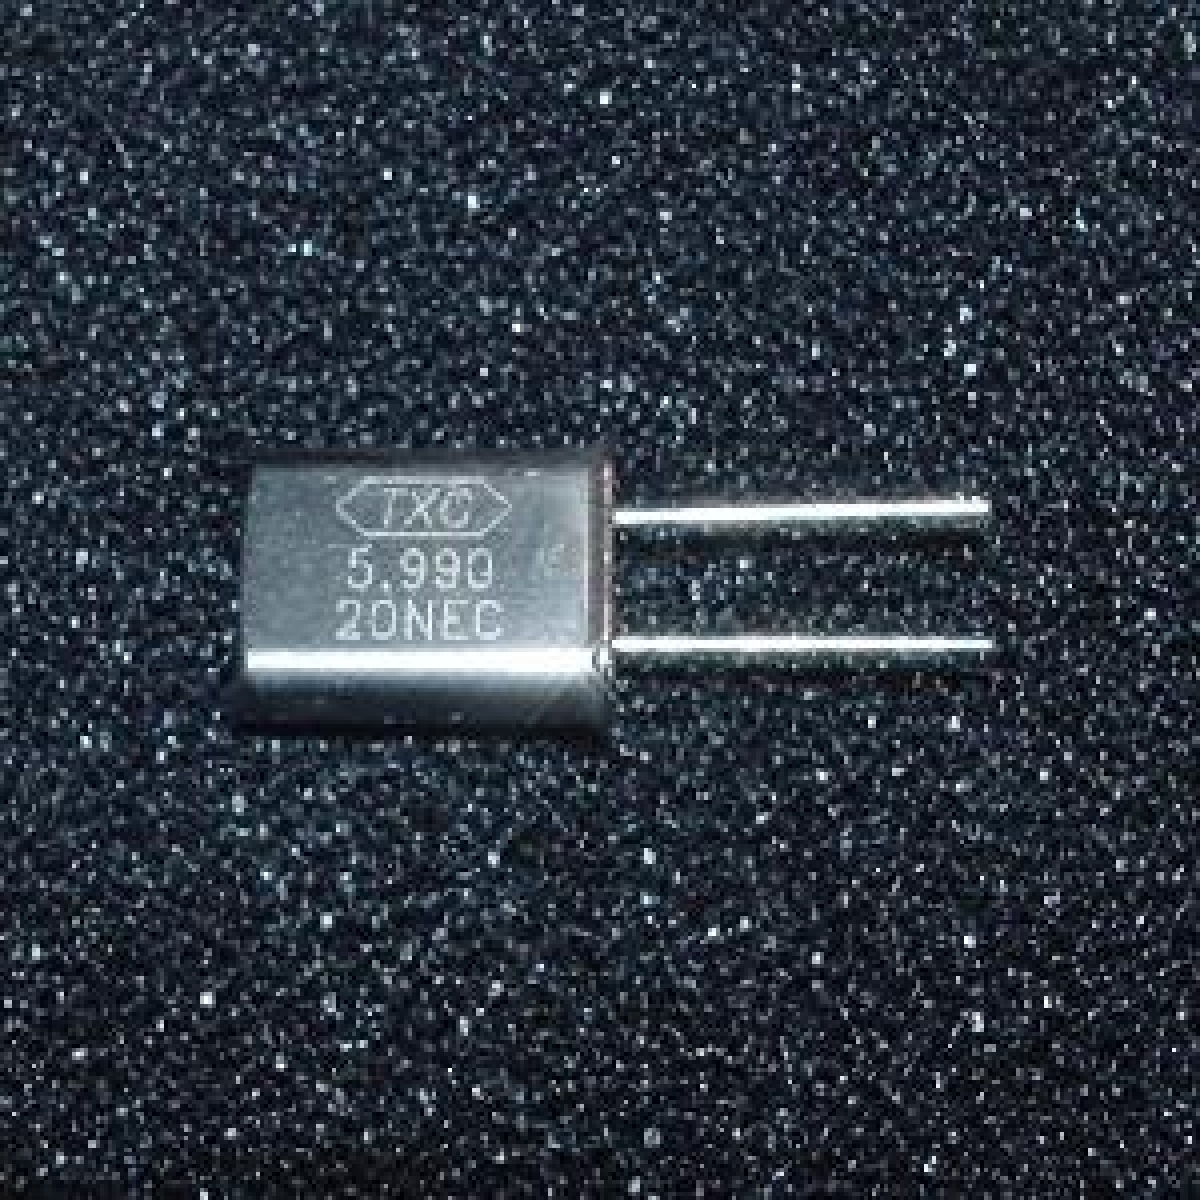 Crystal 5.99 MHz HC49/U